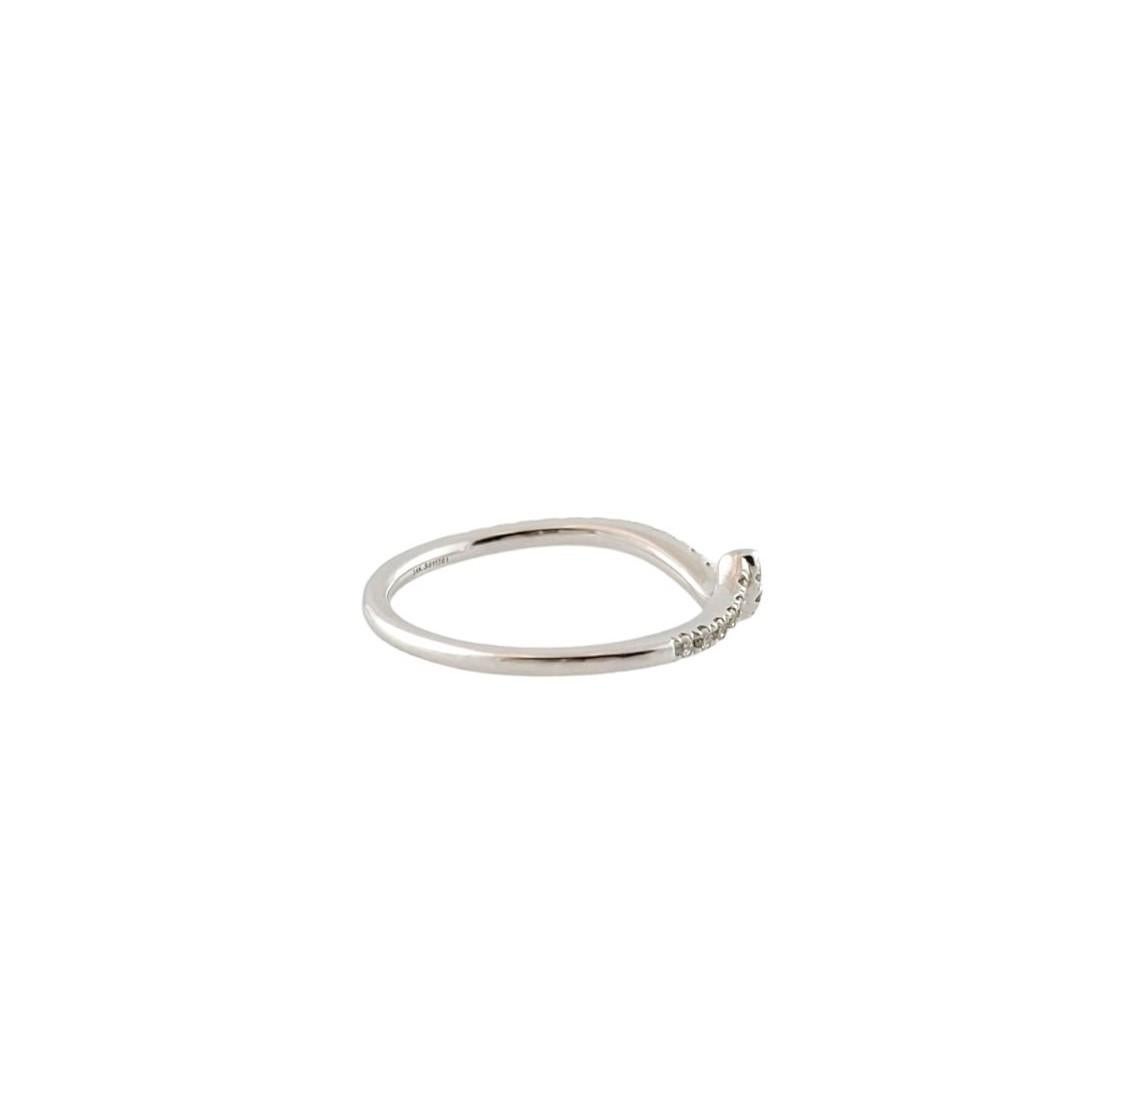 Brilliant Cut Gabriel & Co. 14 Karat White Gold and Diamond Ring Size 6.5 #14685 For Sale